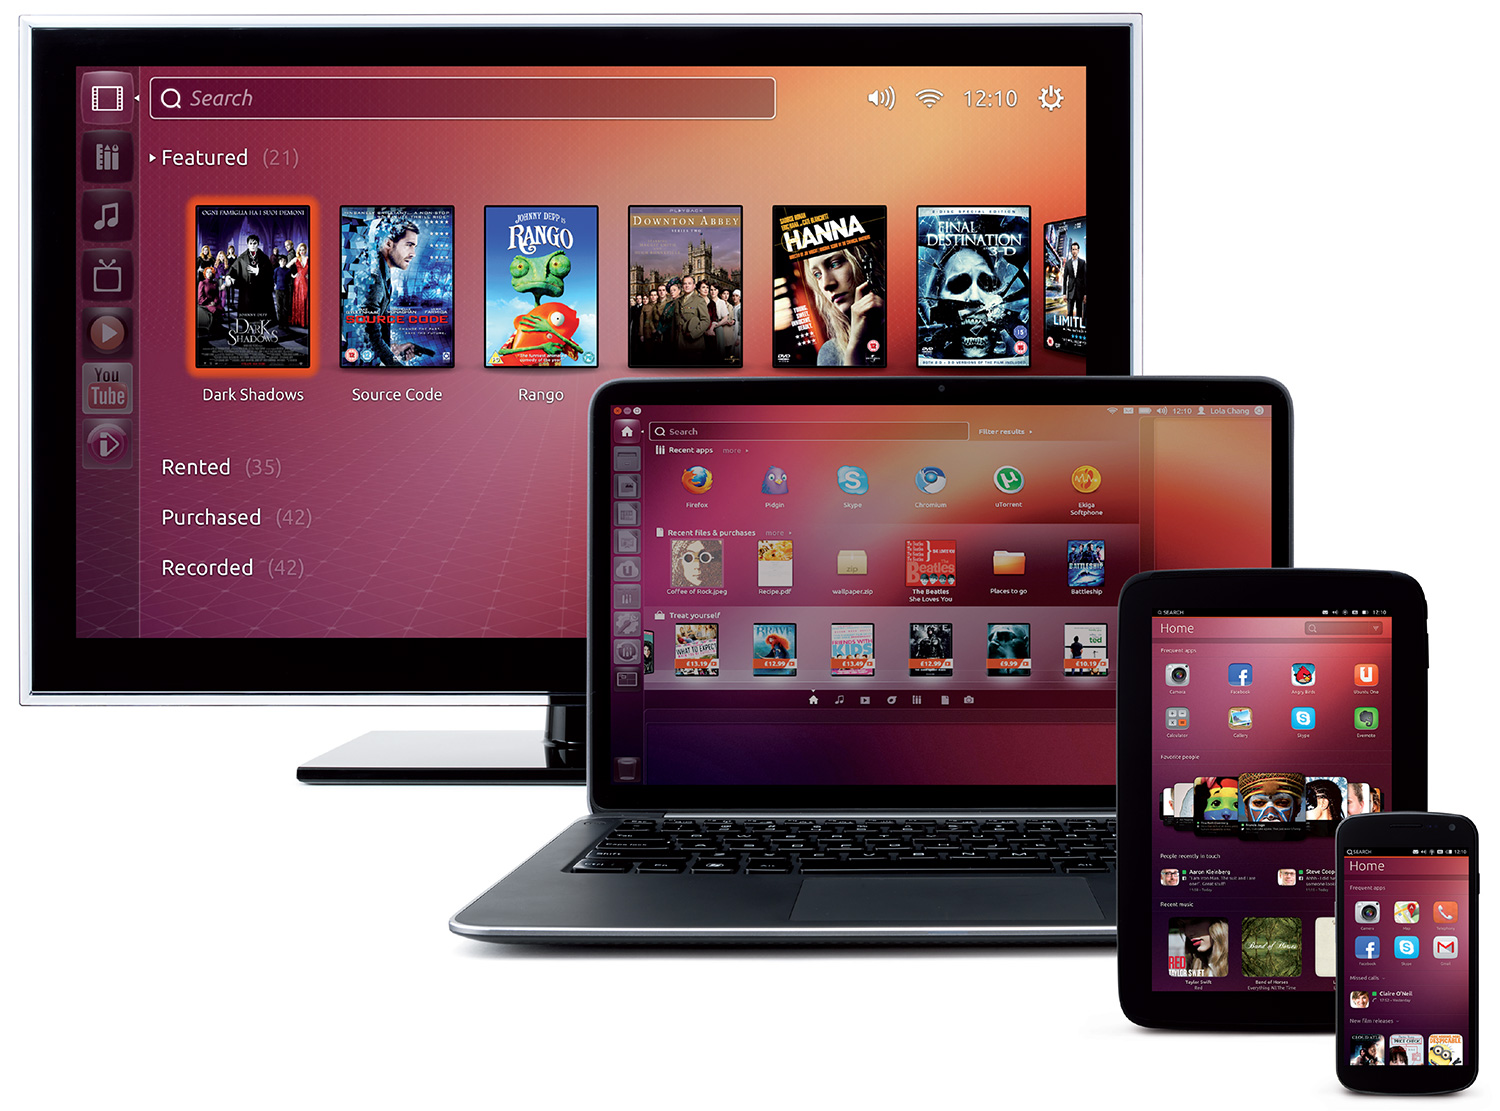 ubuntu-tv-pc-smartphone-tablet.jpg